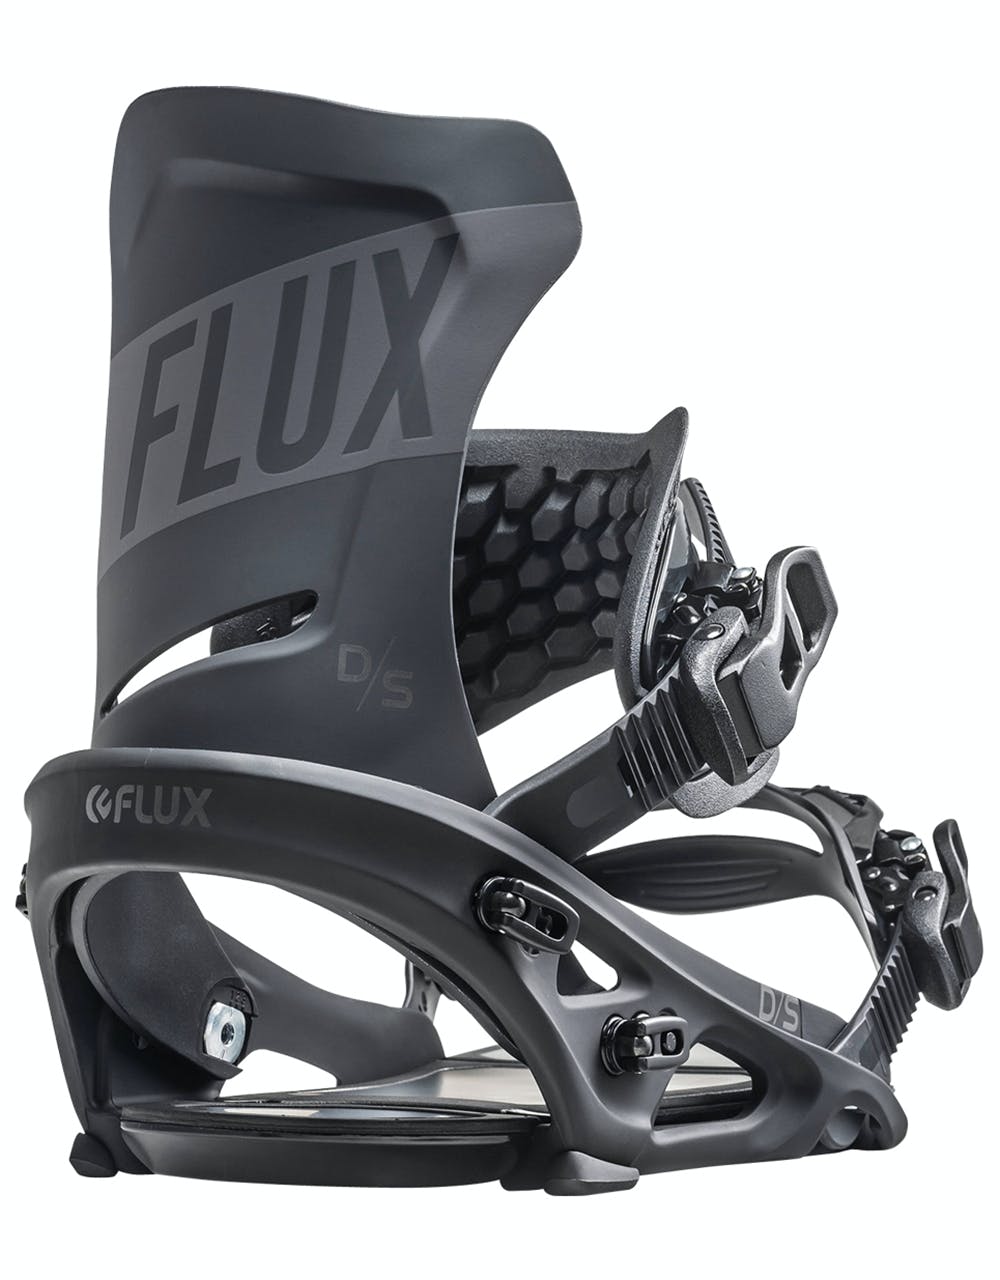 Flux DS 2020 Snowboard Bindings - Black